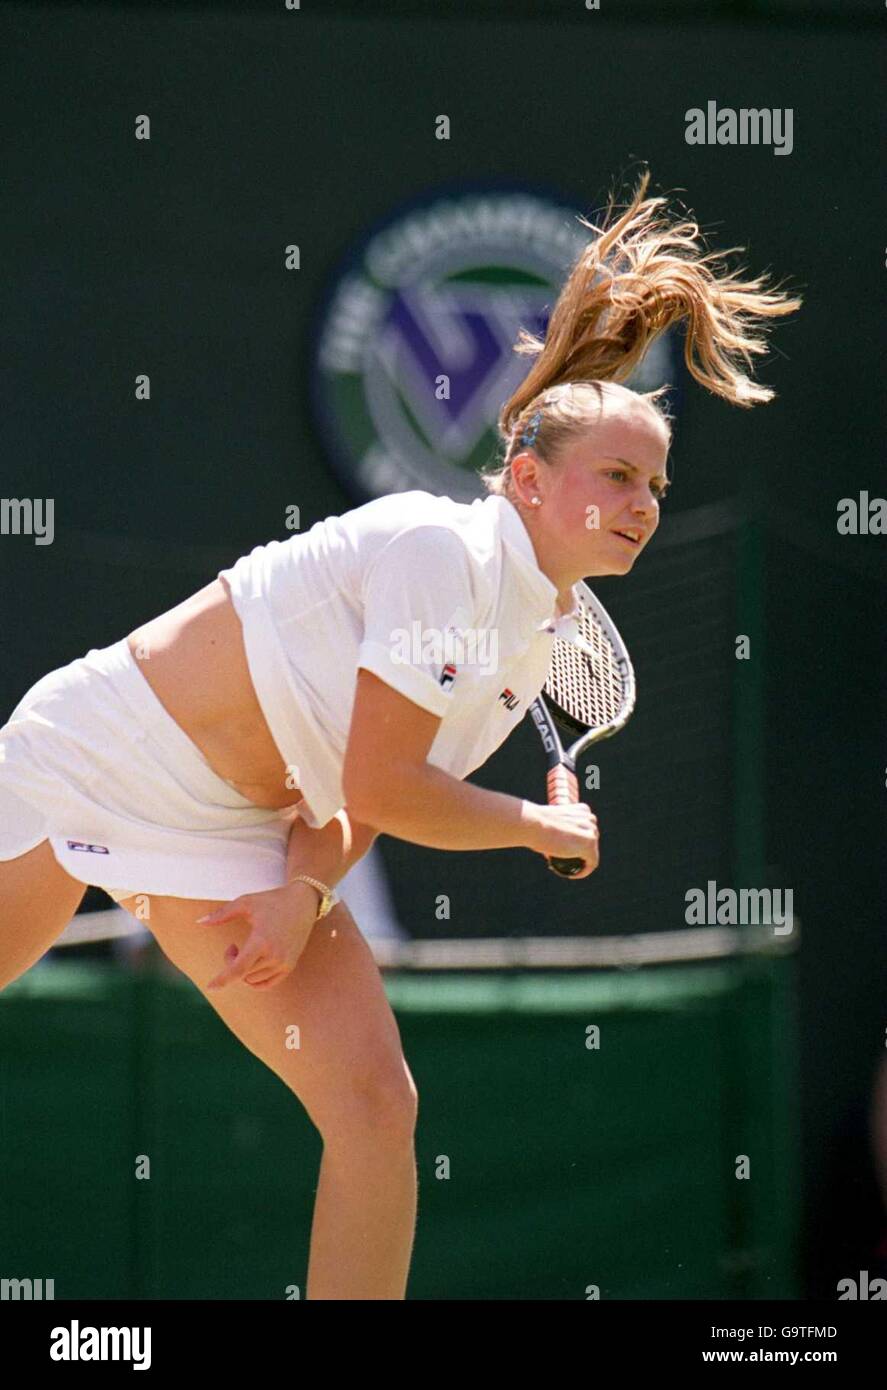 Tennis, Wimbledon 2001, Third Round. Jelena Dokic in action against Barbara Schett Stock Photo